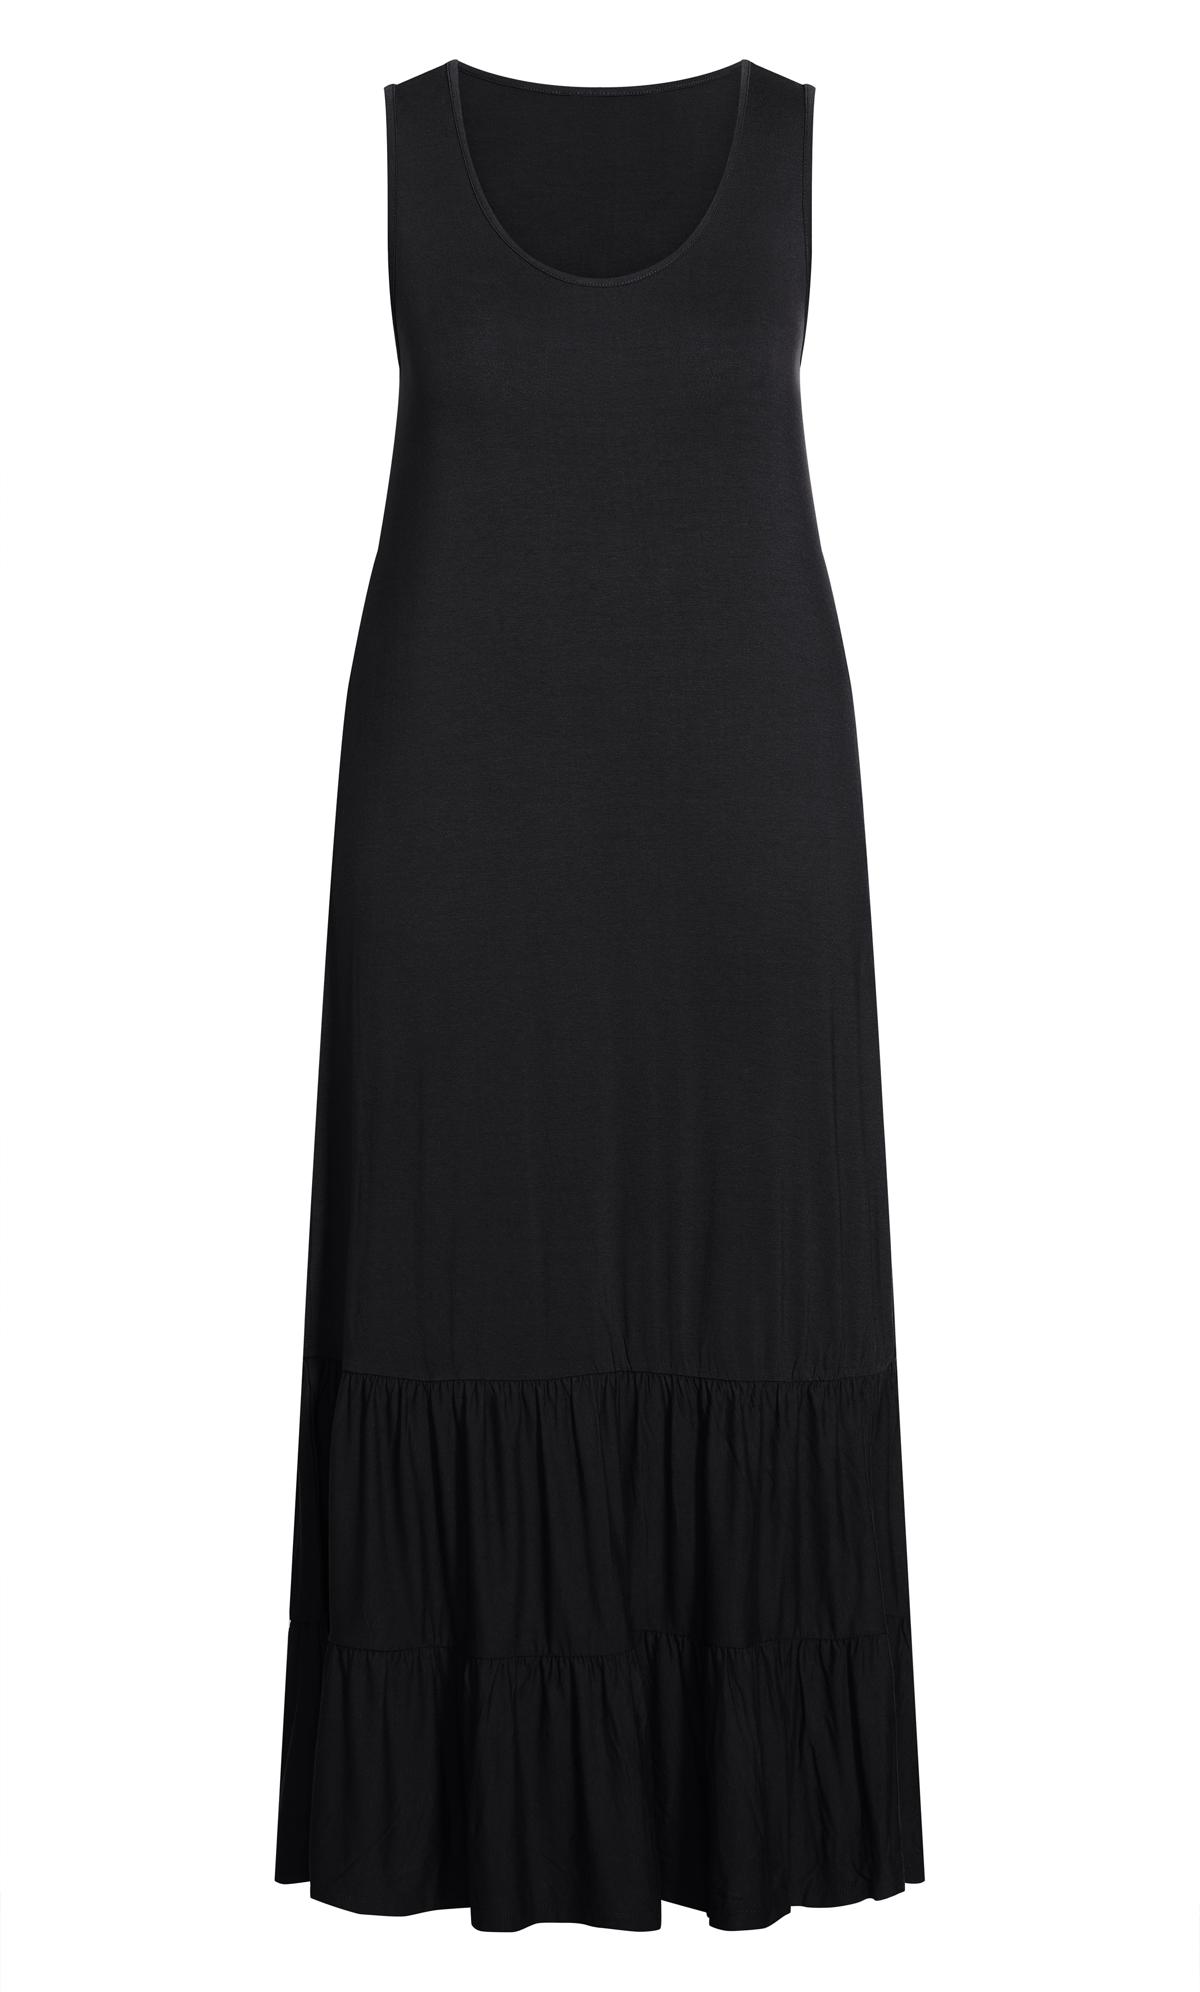 Frill Hem Plain Black Dress 3